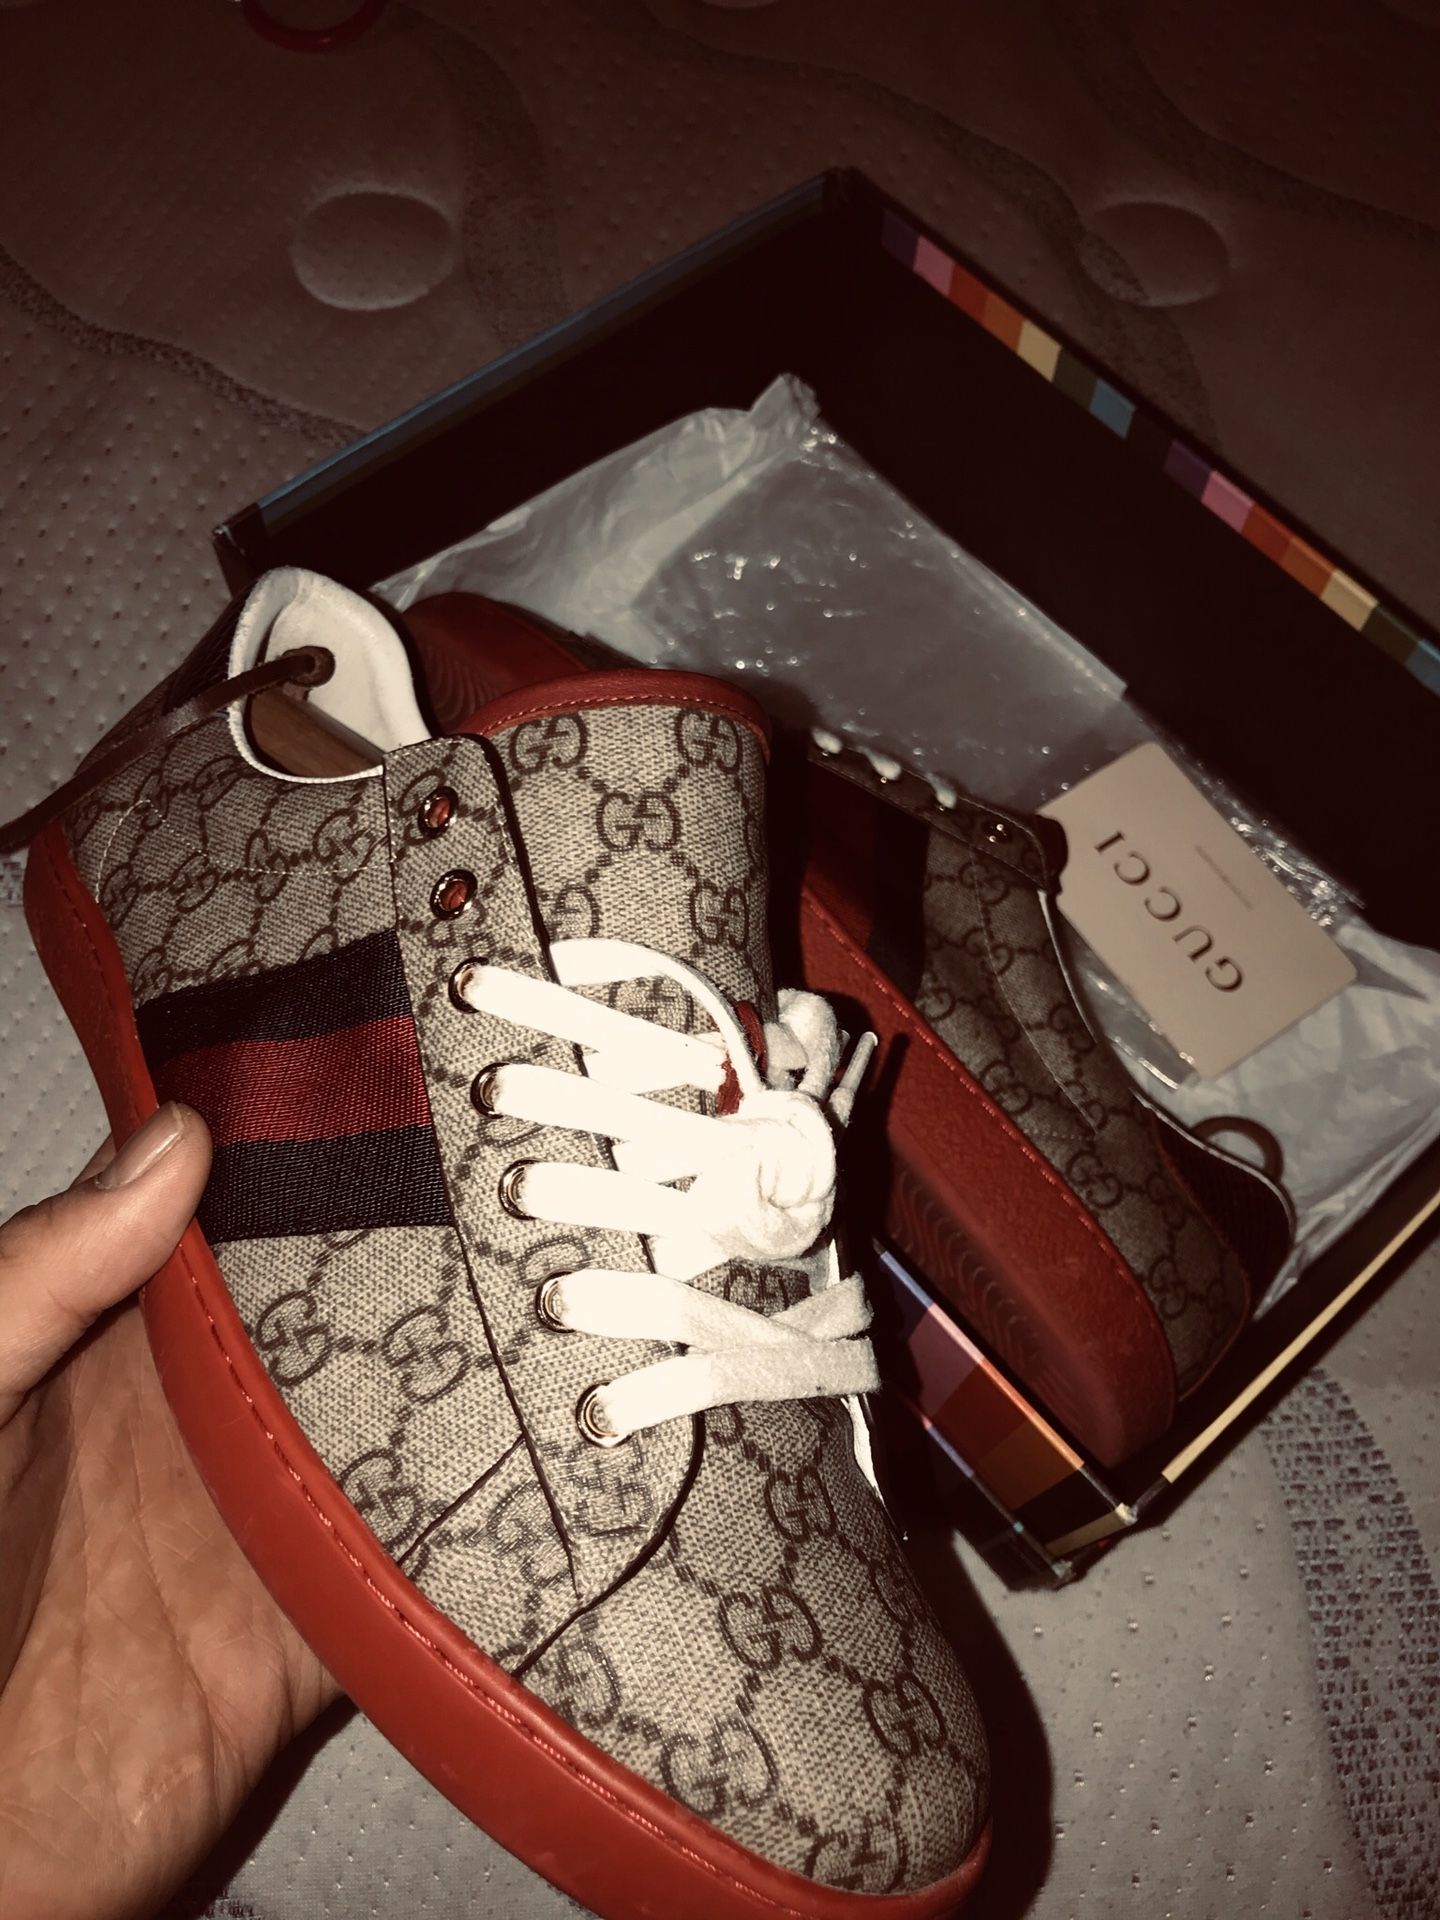 Gucci shoe